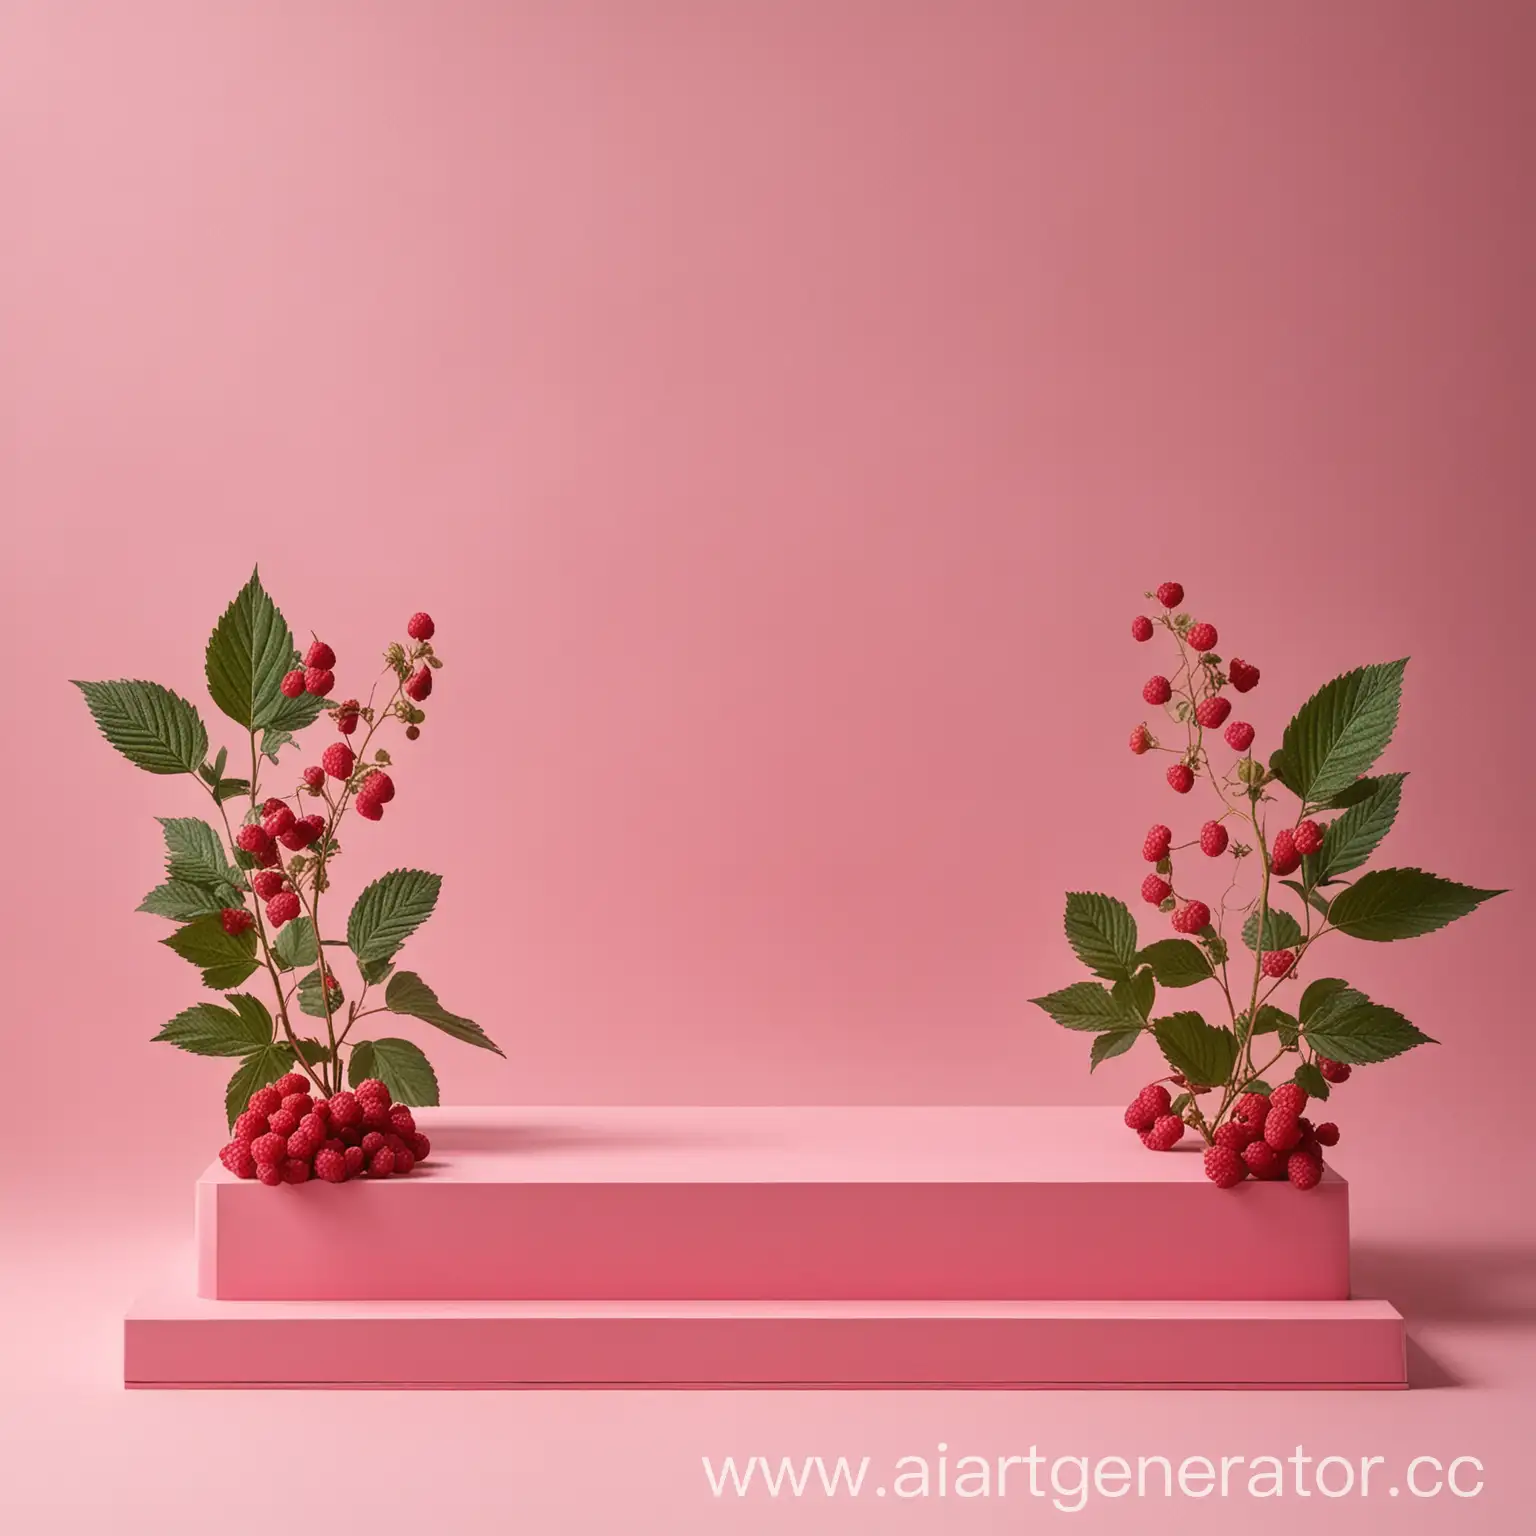 Vibrant-Pink-Podium-Displaying-Raspberry-Goods-with-Lush-Leaf-Decor